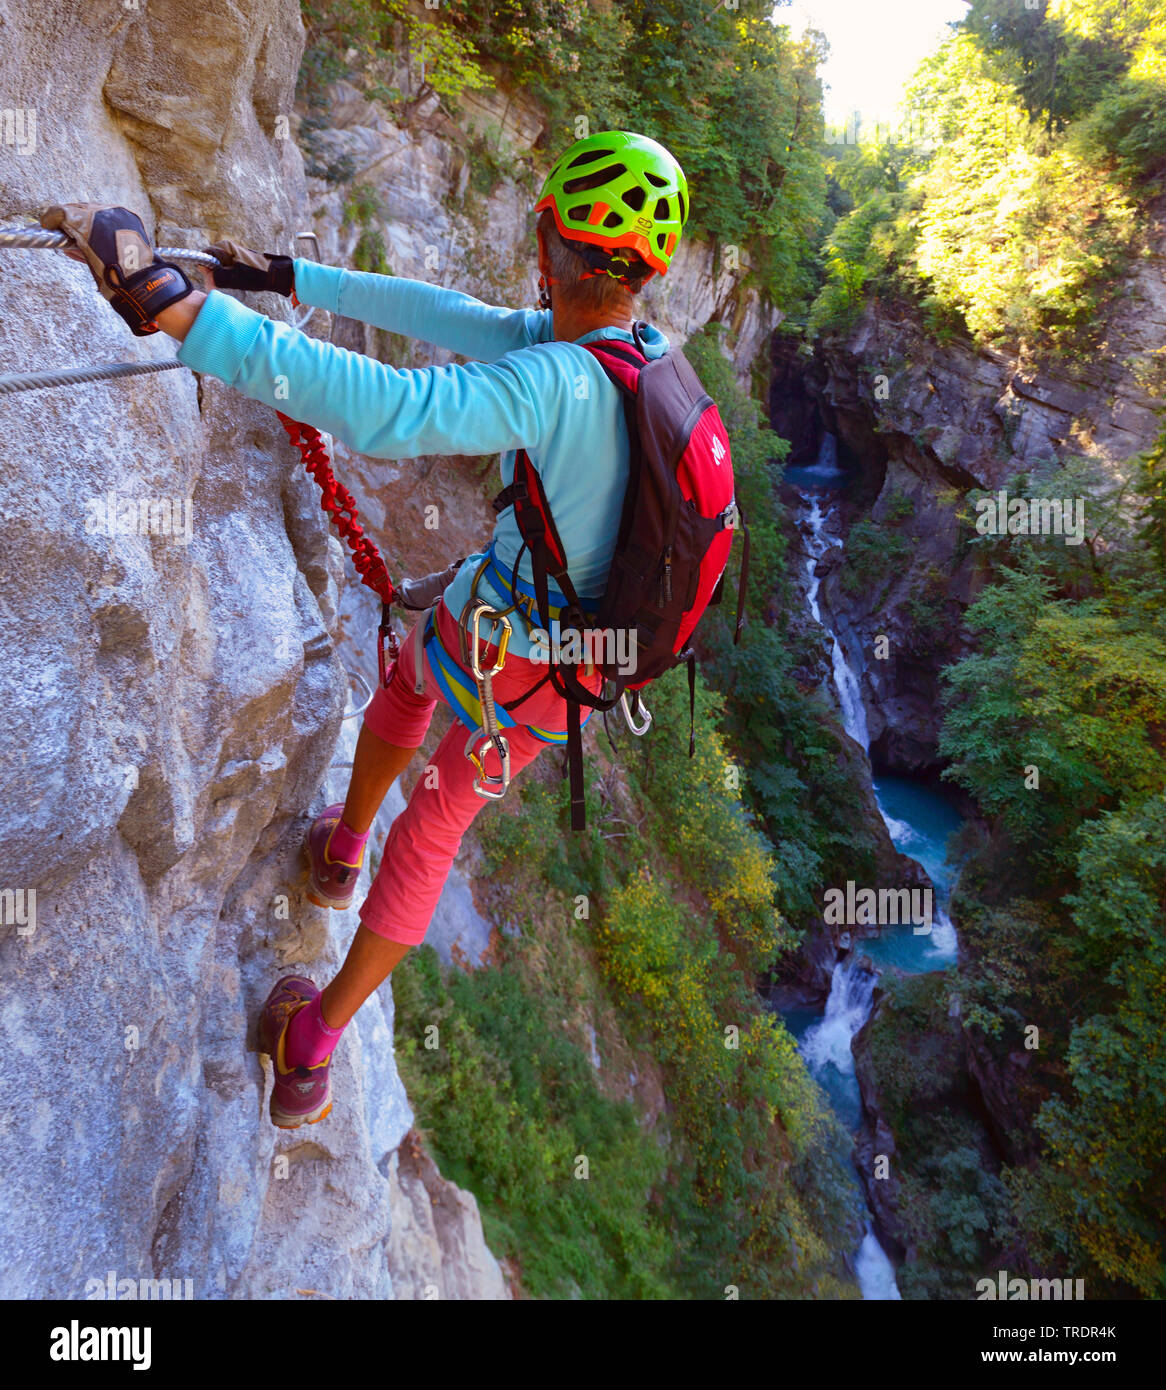 climber on a rock face in a canyon, France, Savoie, Saint Gervais Stock Photo